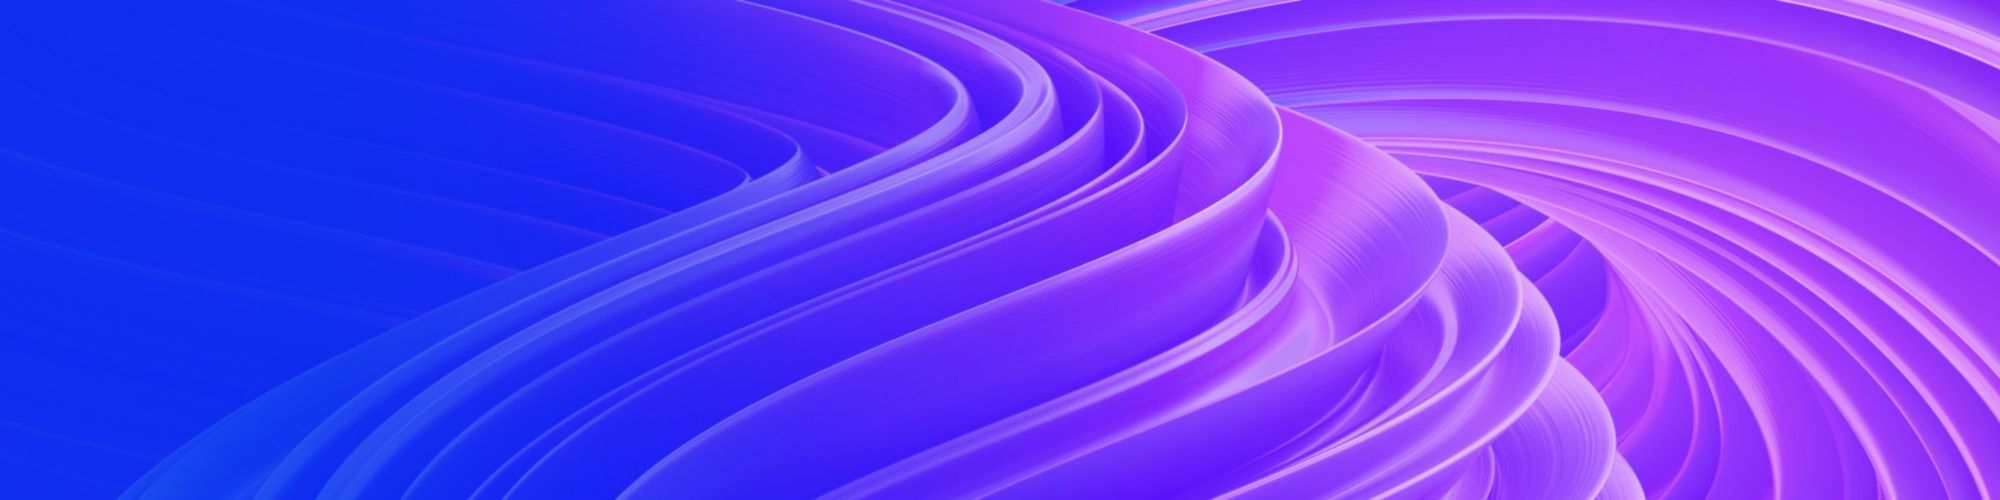 violet blue wavy lines